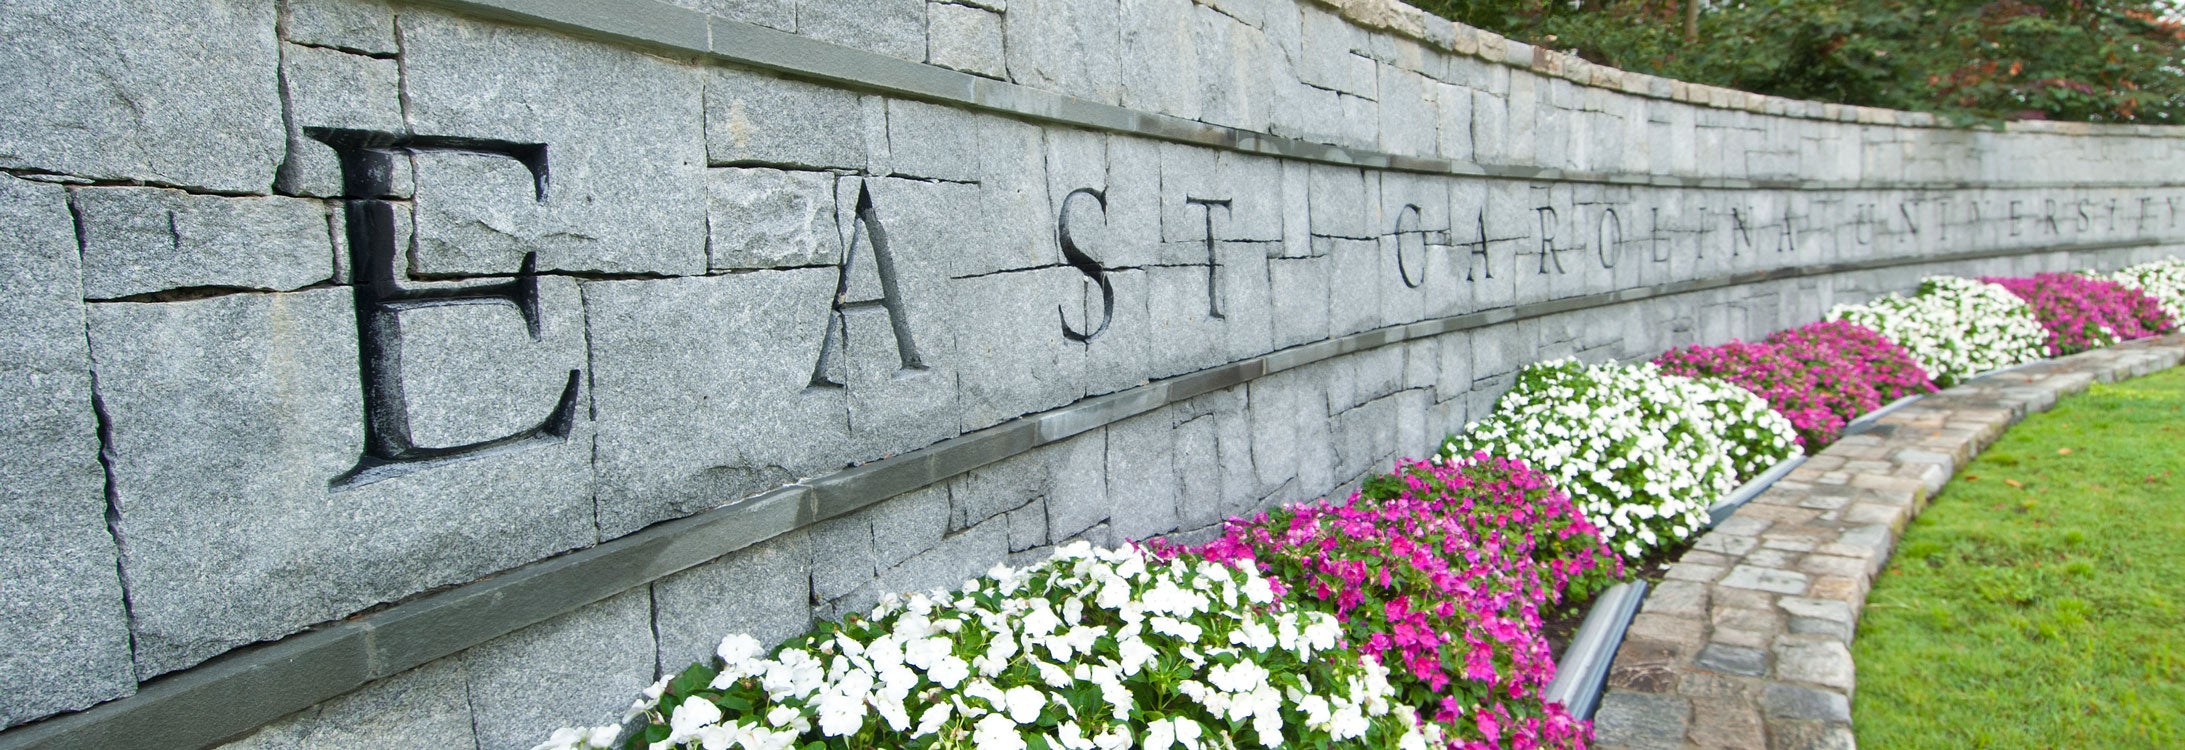 Stone wall inscribed with East Carolina University